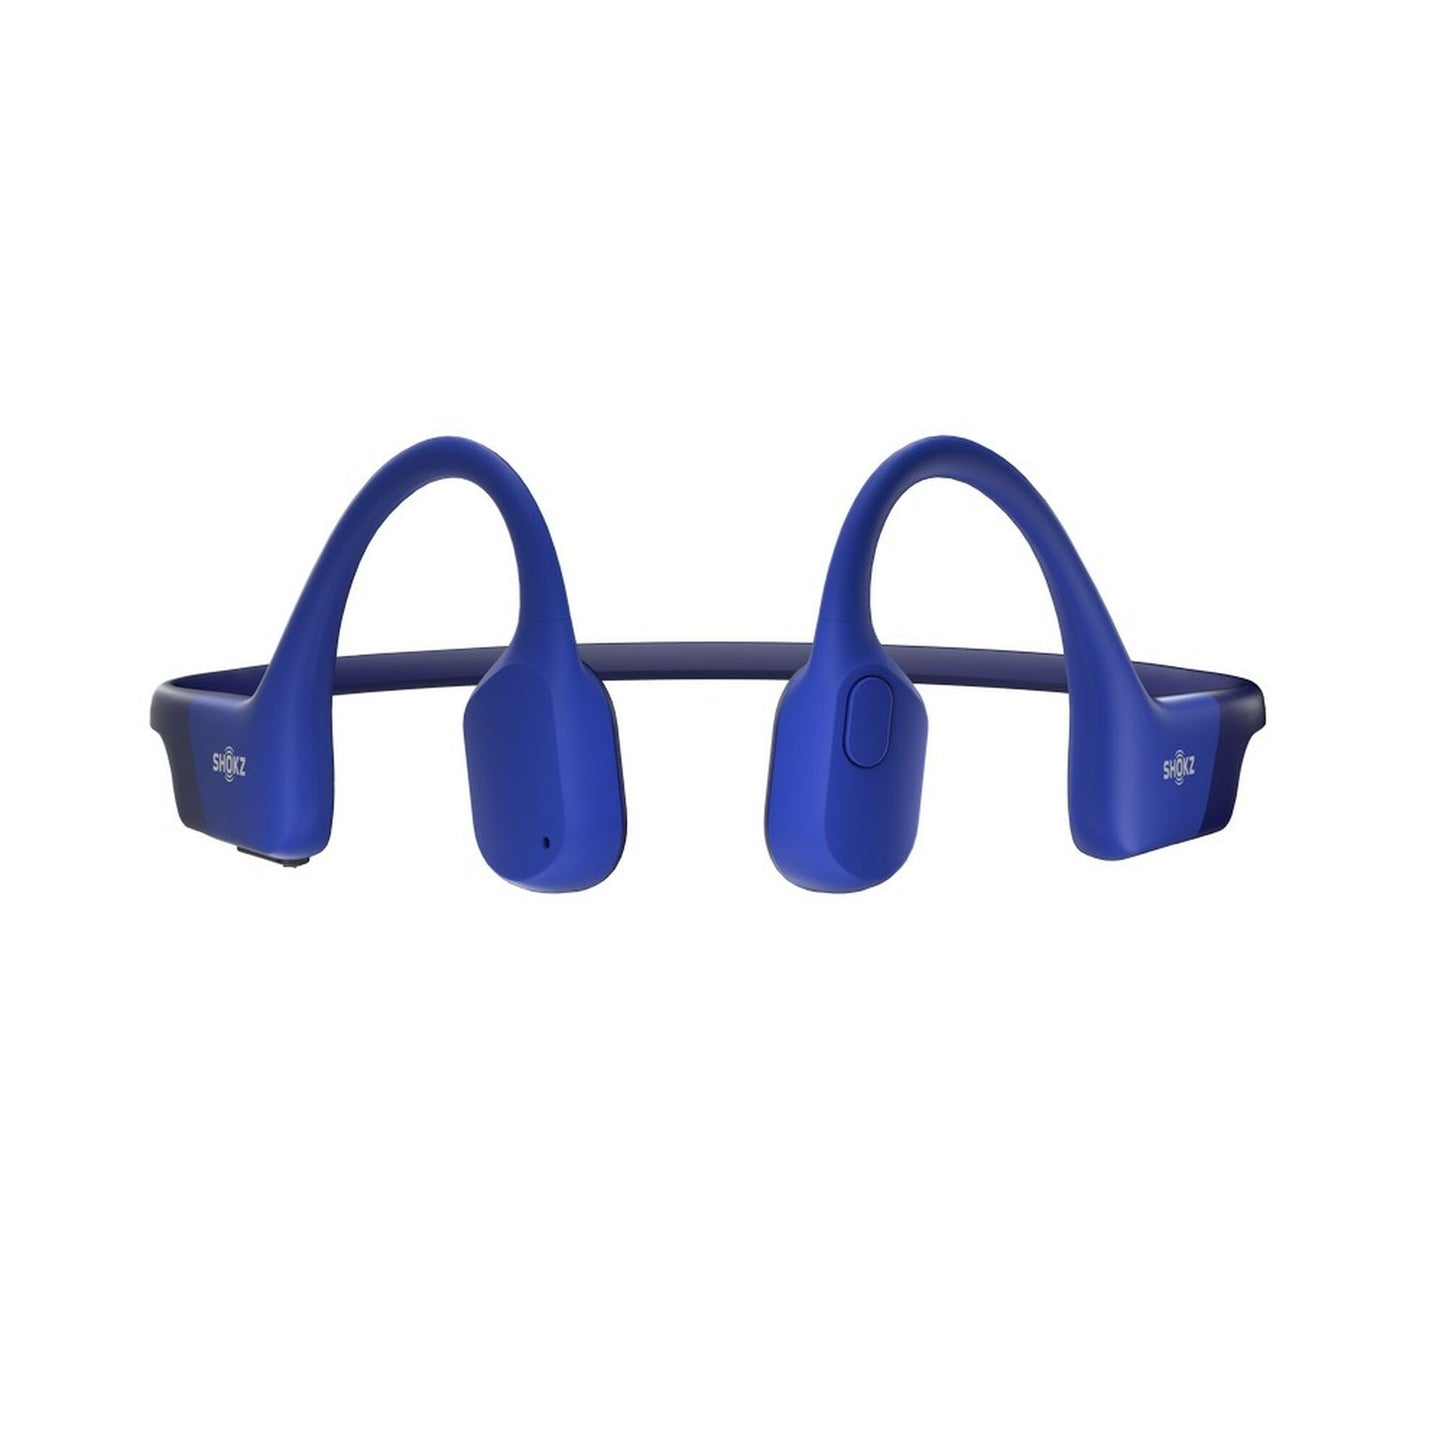 SHOKZ OPENRUN Mini Bone Conduction Open-Ear Headphones (Blue)